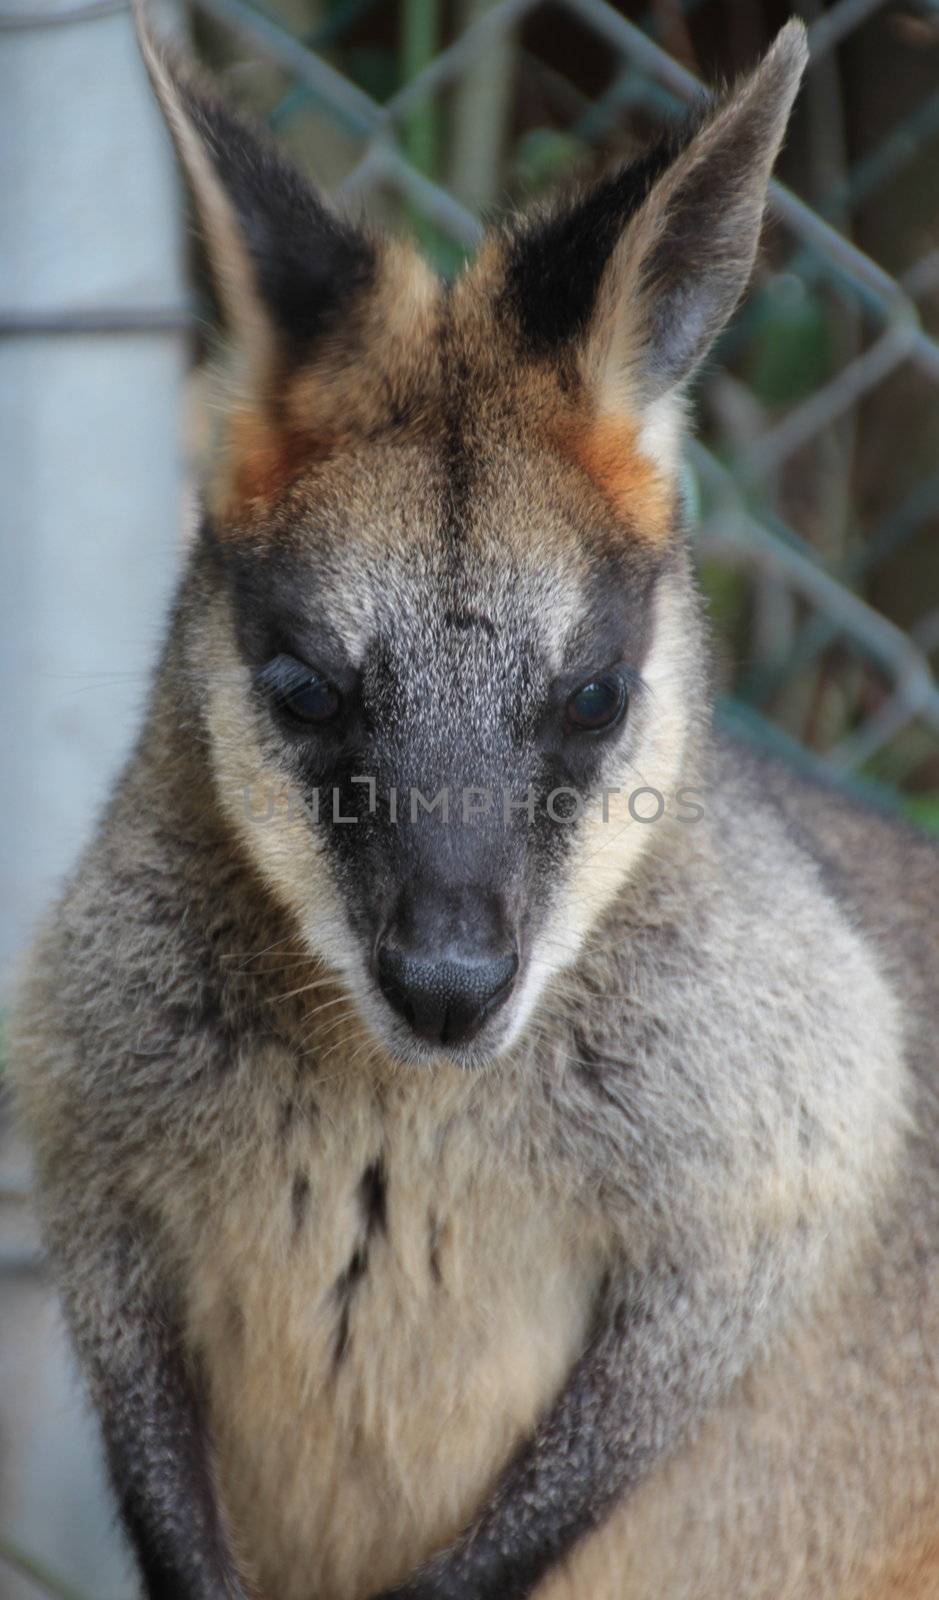 Frontal head shot of a small Australian Wallaby